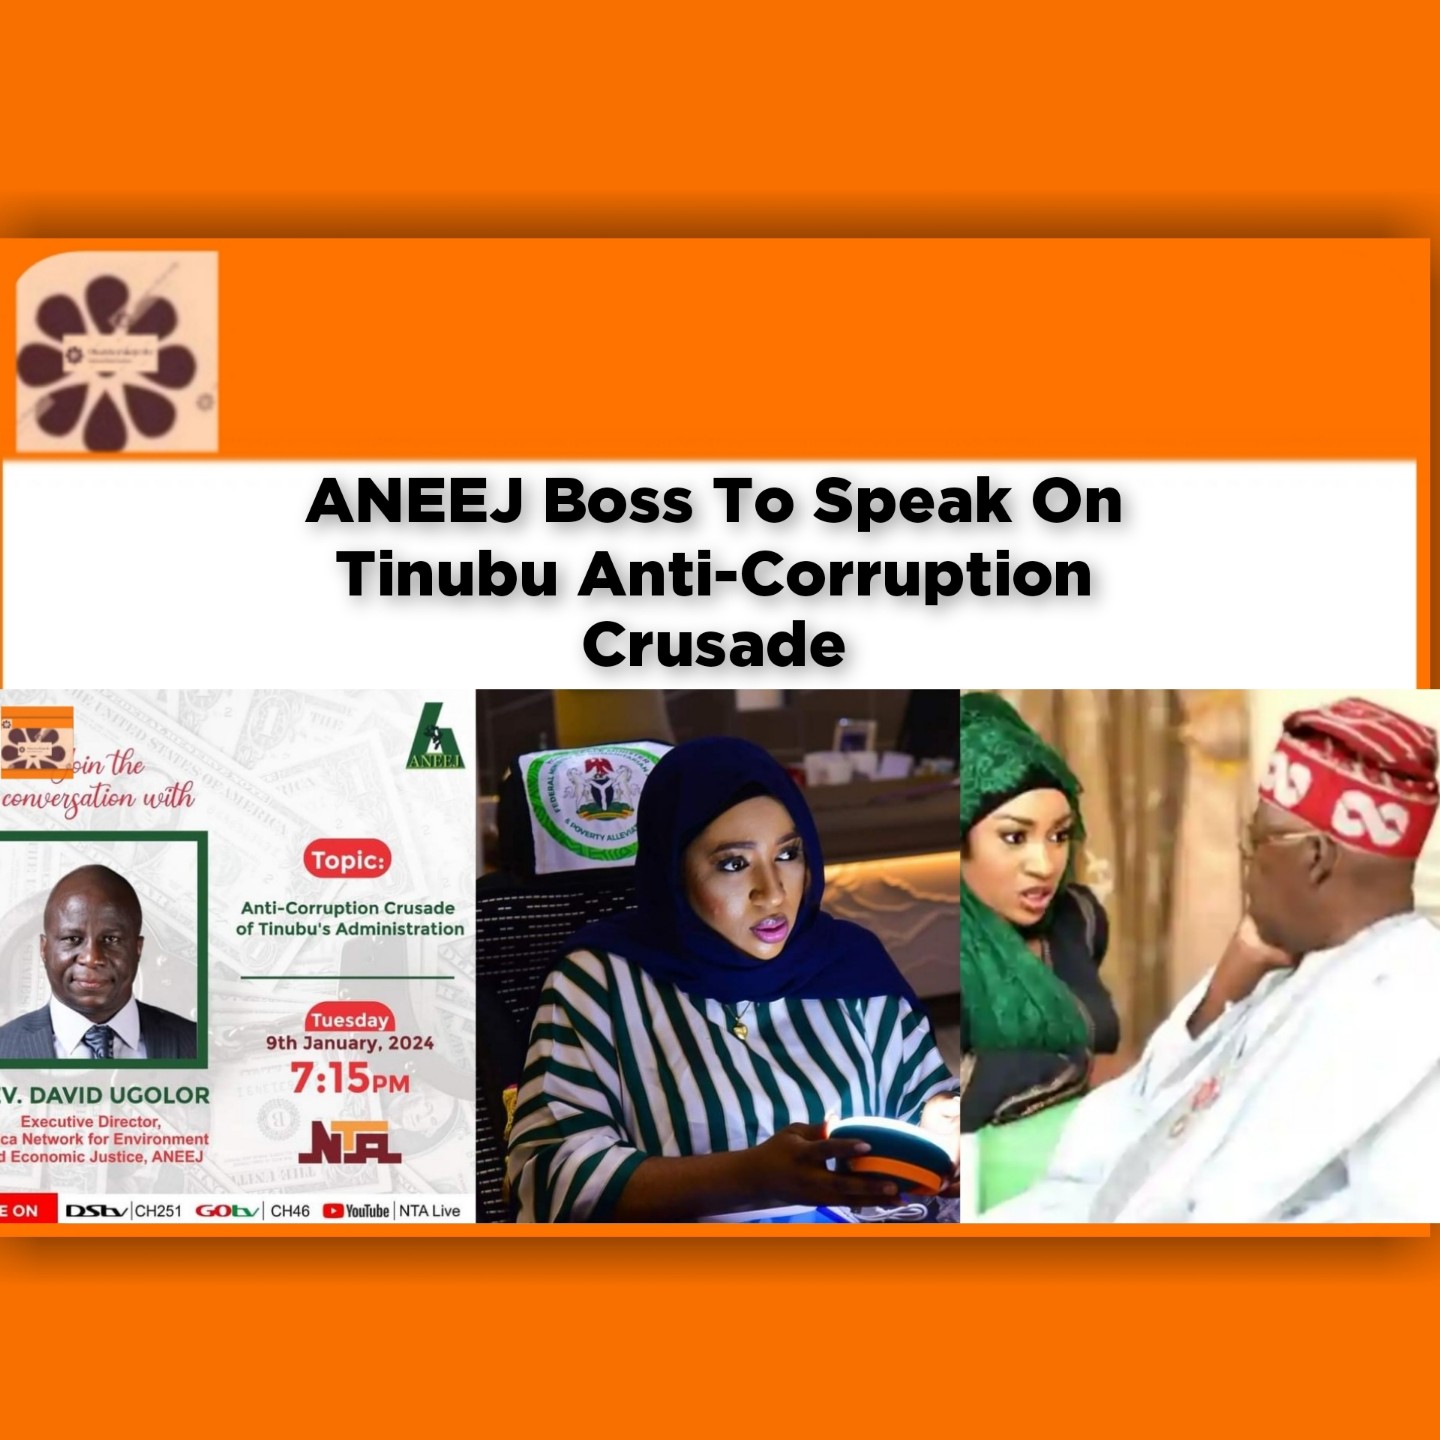 ANEEJ Boss To Speak On Tinubu Anti-Corruption Crusade ~ OsazuwaAkonedo #ANEEJ #Betta #Bola #Corruption #David #Edu #Nigeria #Tinubu #Ugolor